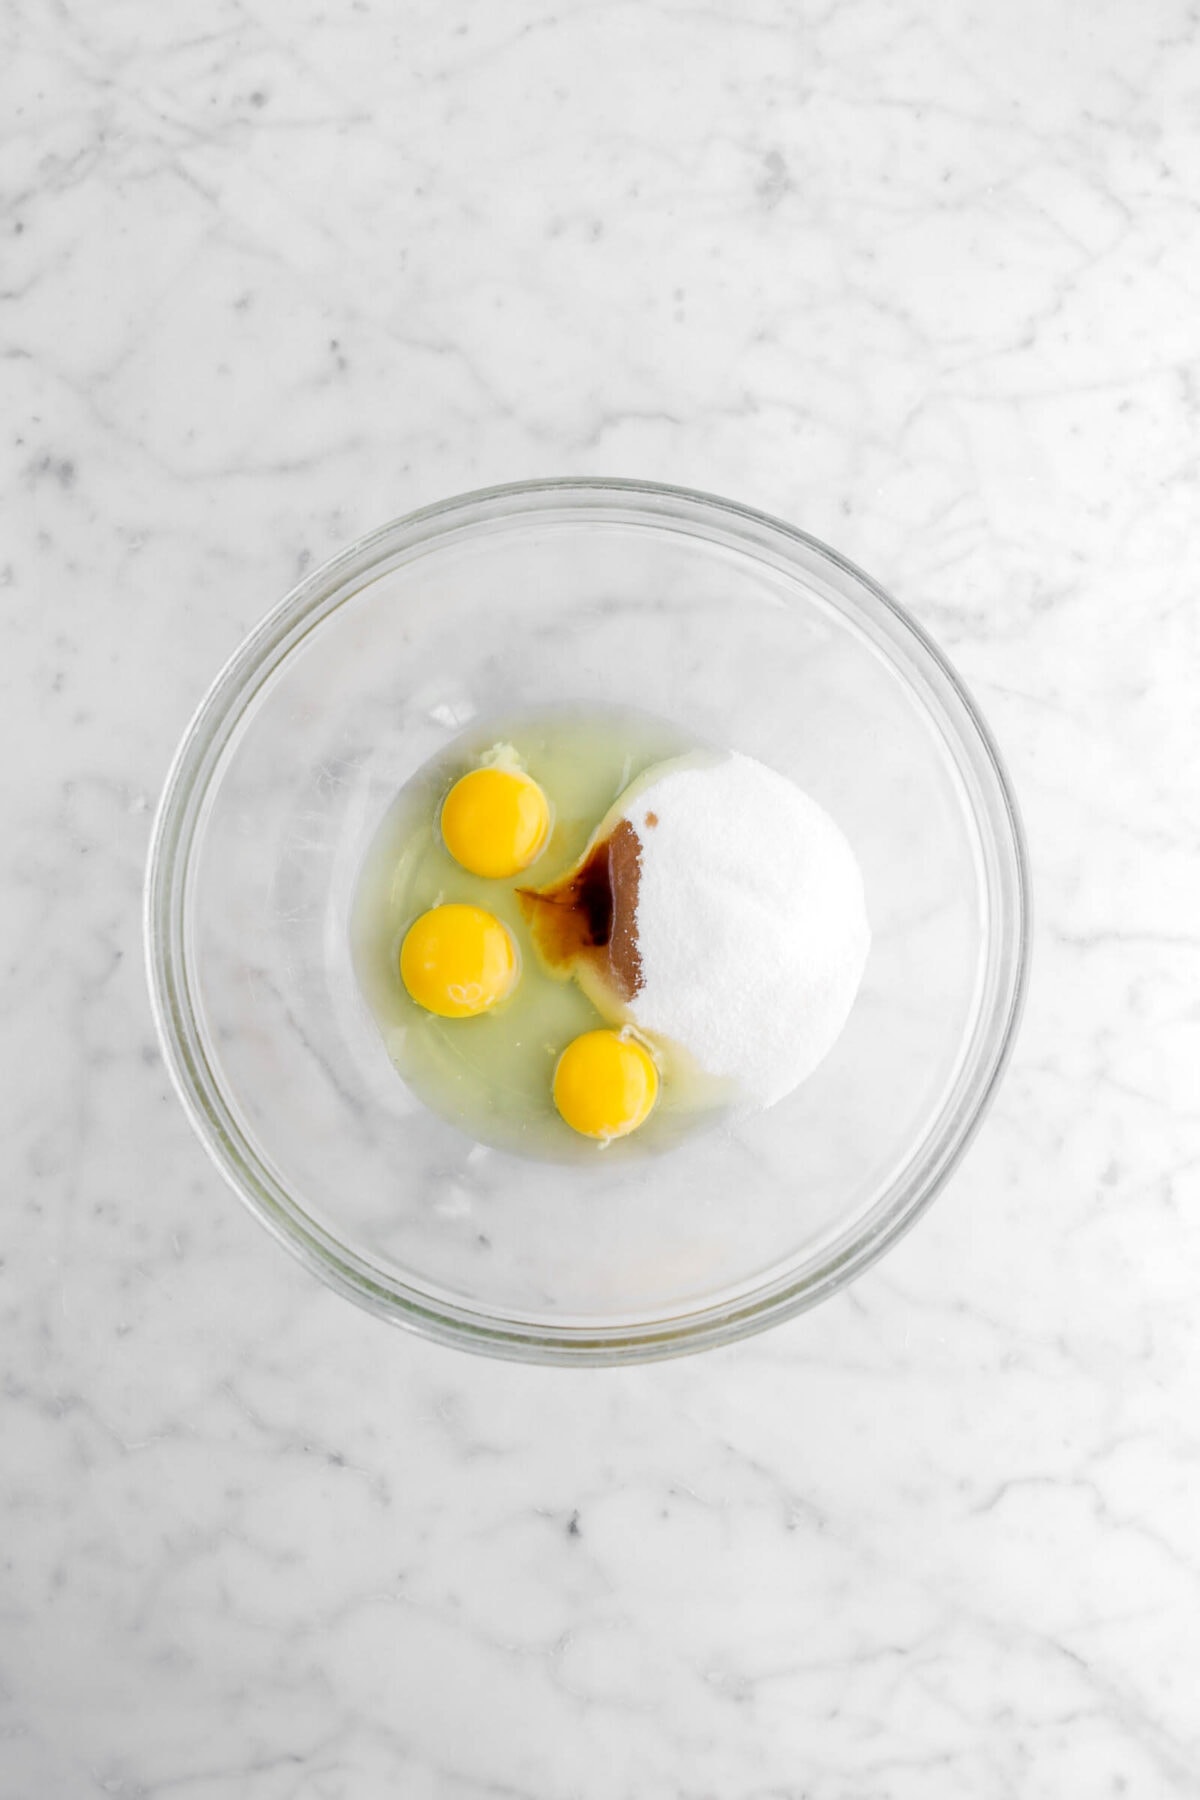 eggs, vanilla, and sugar in glass bowl.